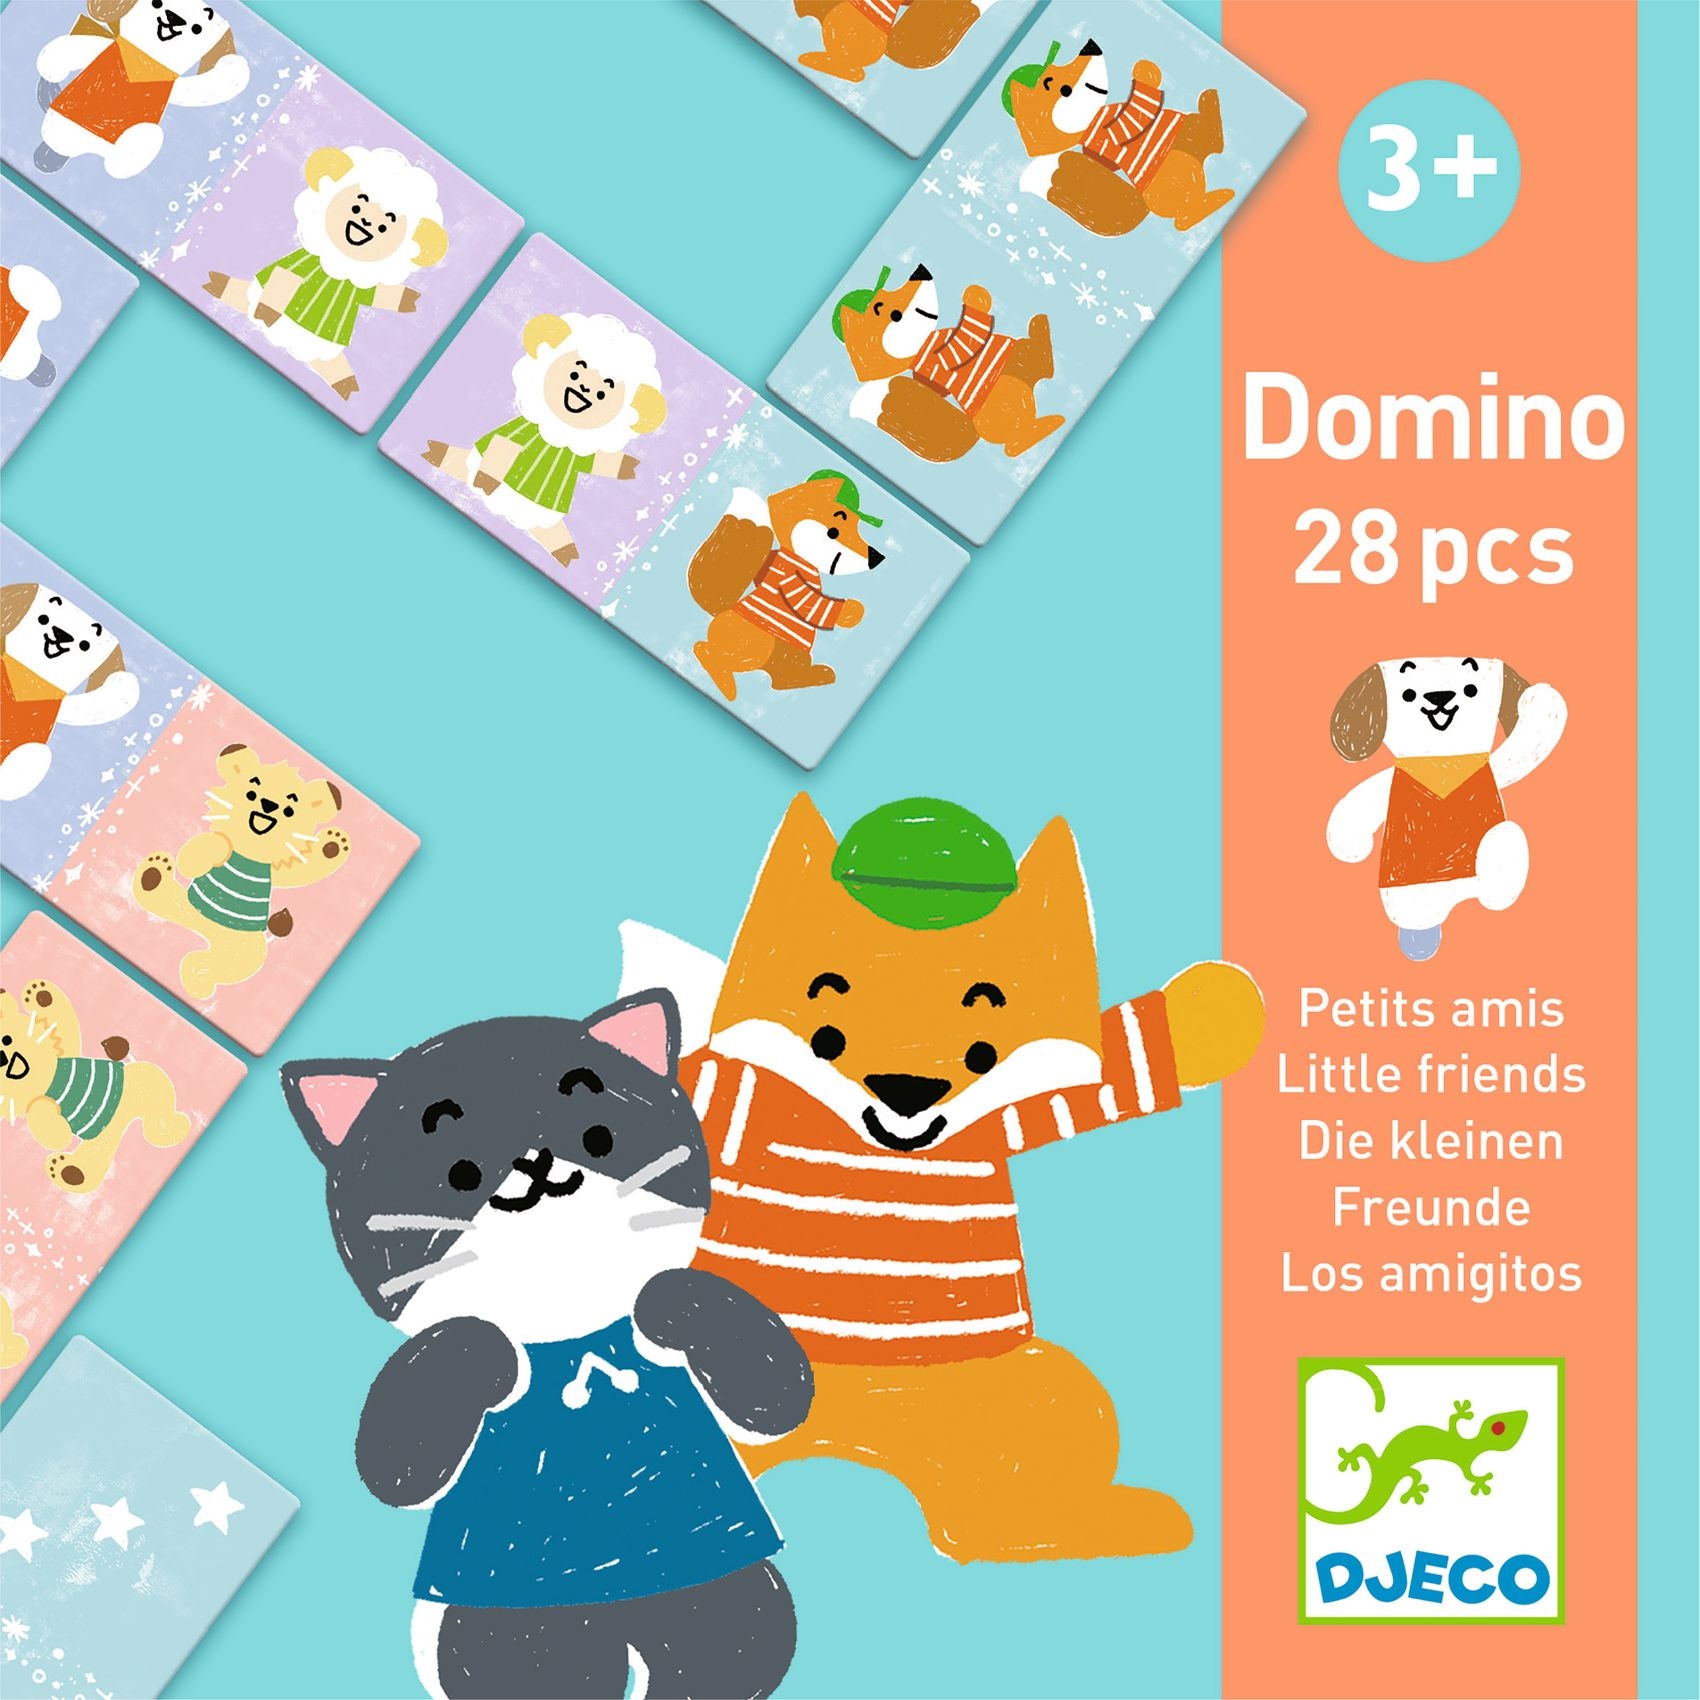 Dominó játék - Kis barátok - Domino Little friends - 0